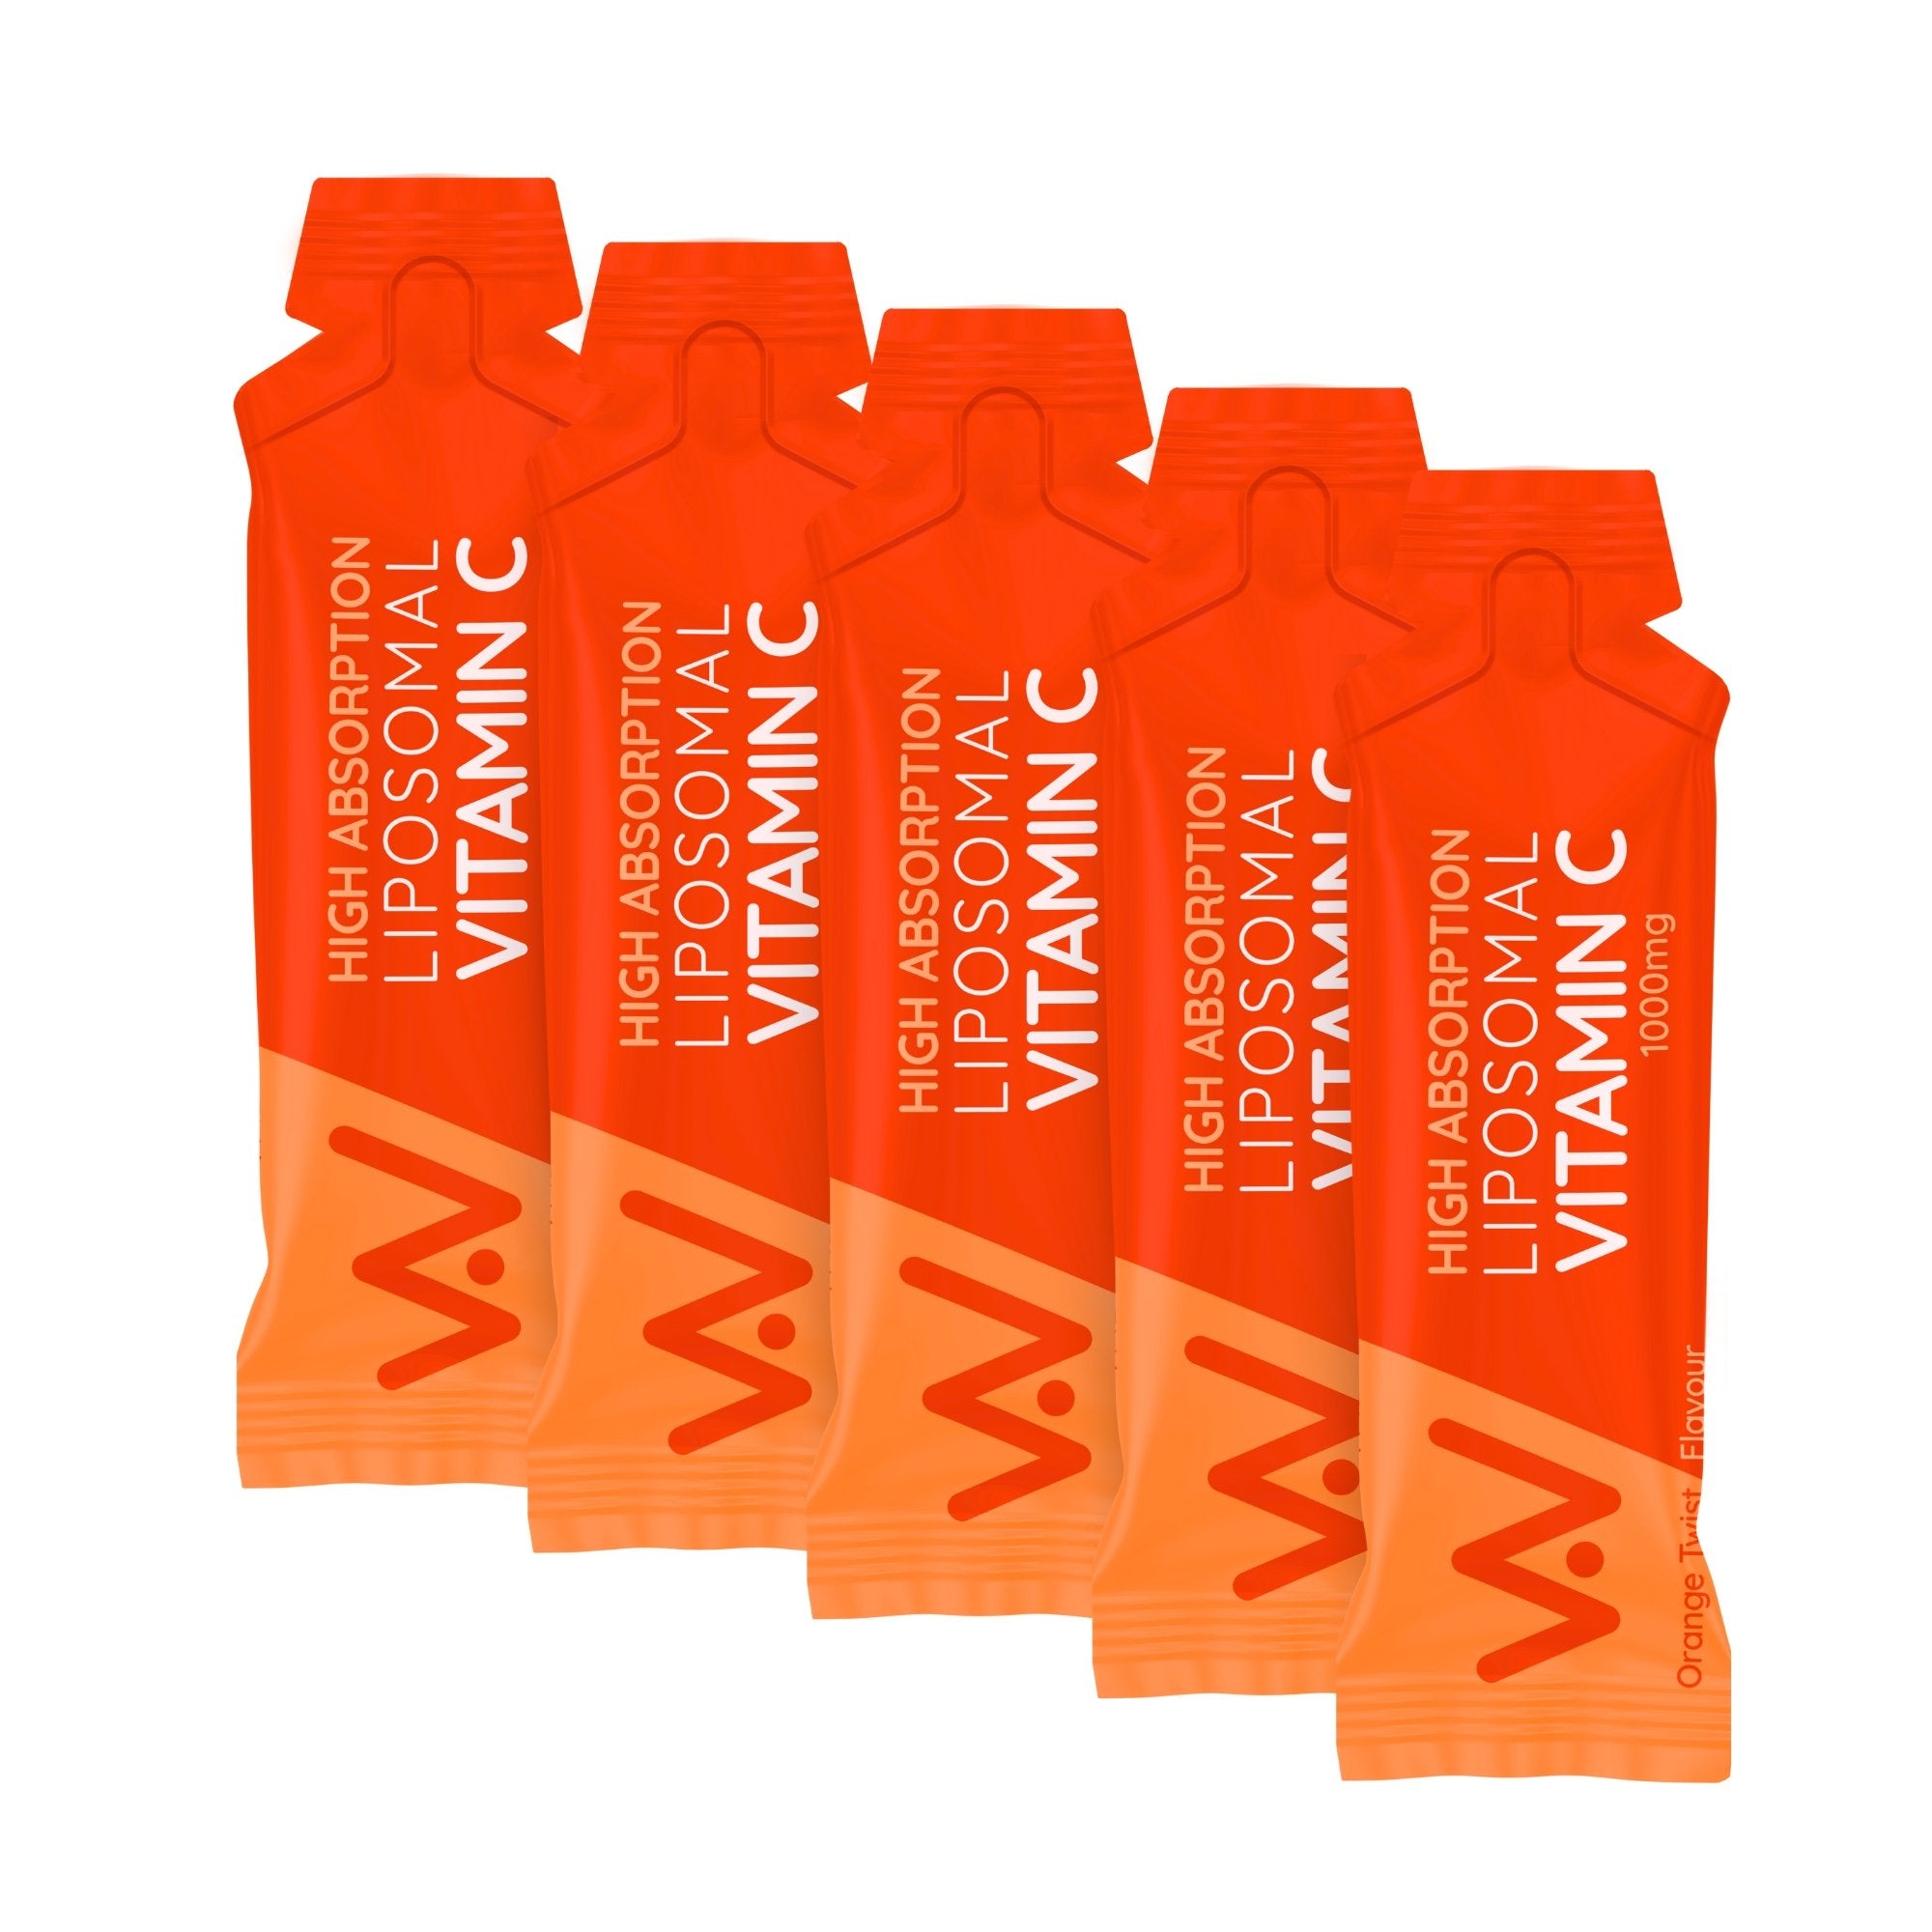 NEW Liposomal Vitamin C Liquid - 1000mg - 5 Sachet Pack - Orange Twist Flavour